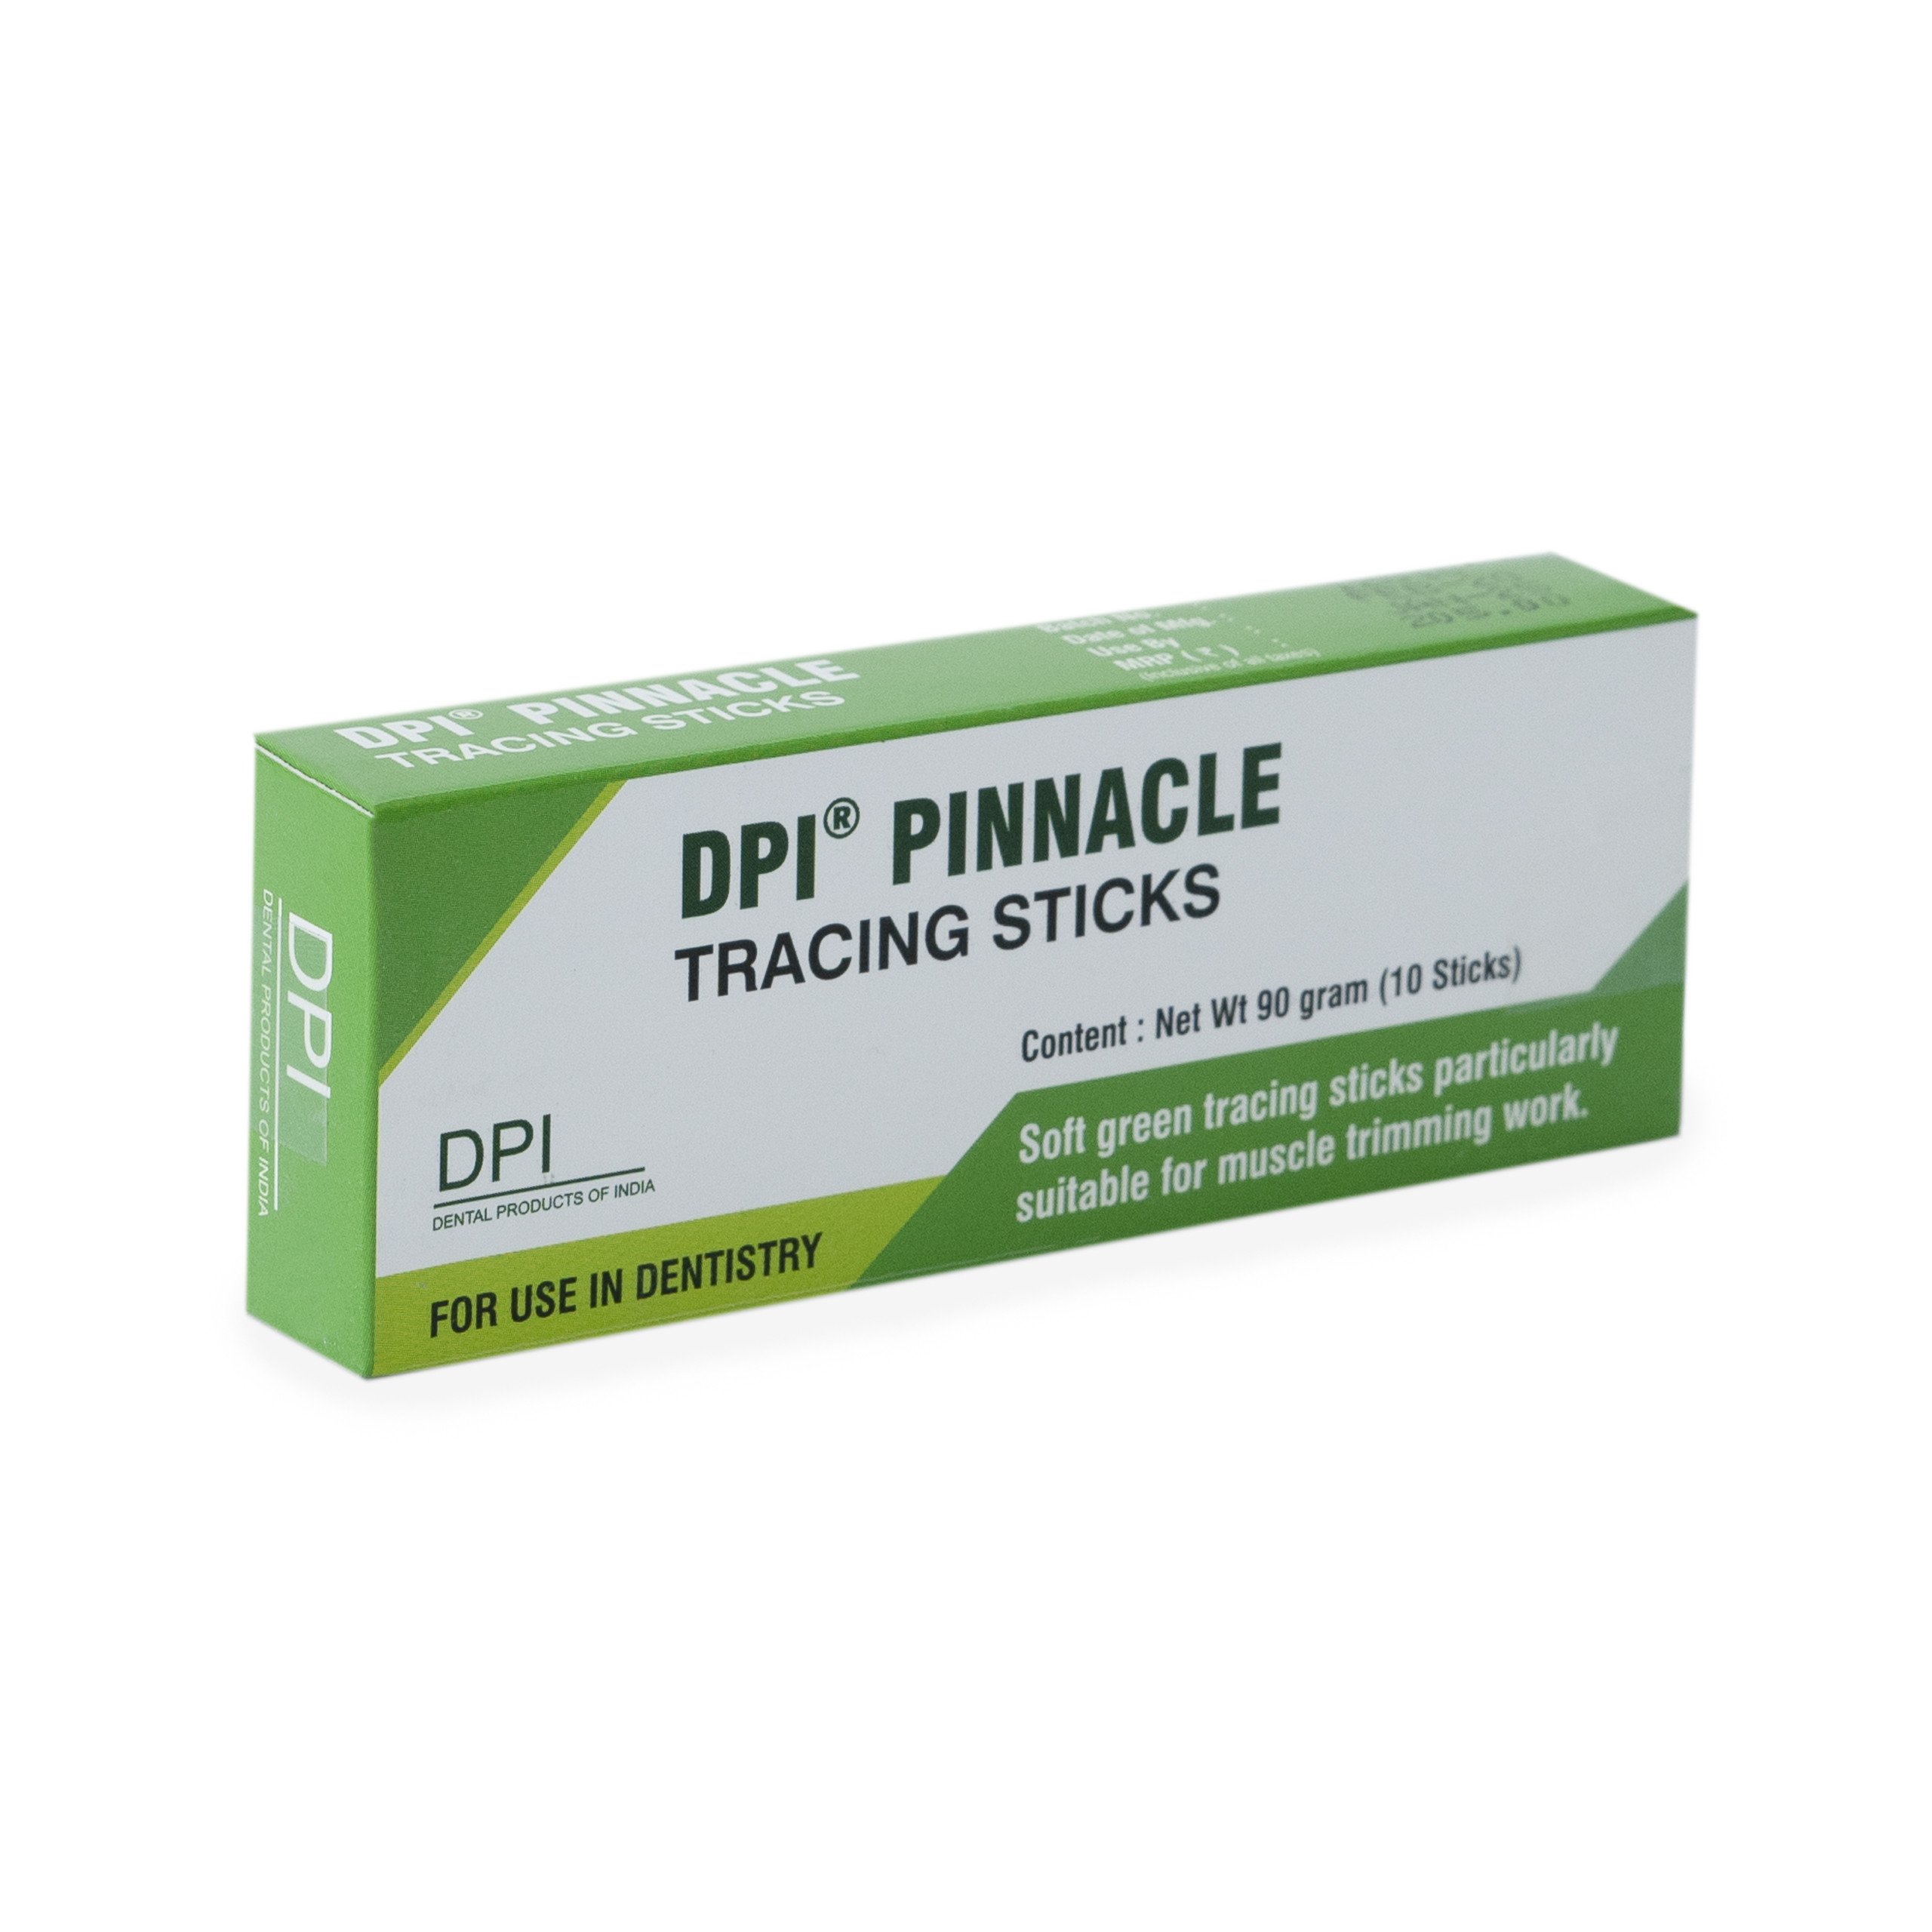 DPI Pinnacle Tracing Stick 90 Gm - 10 Sticks